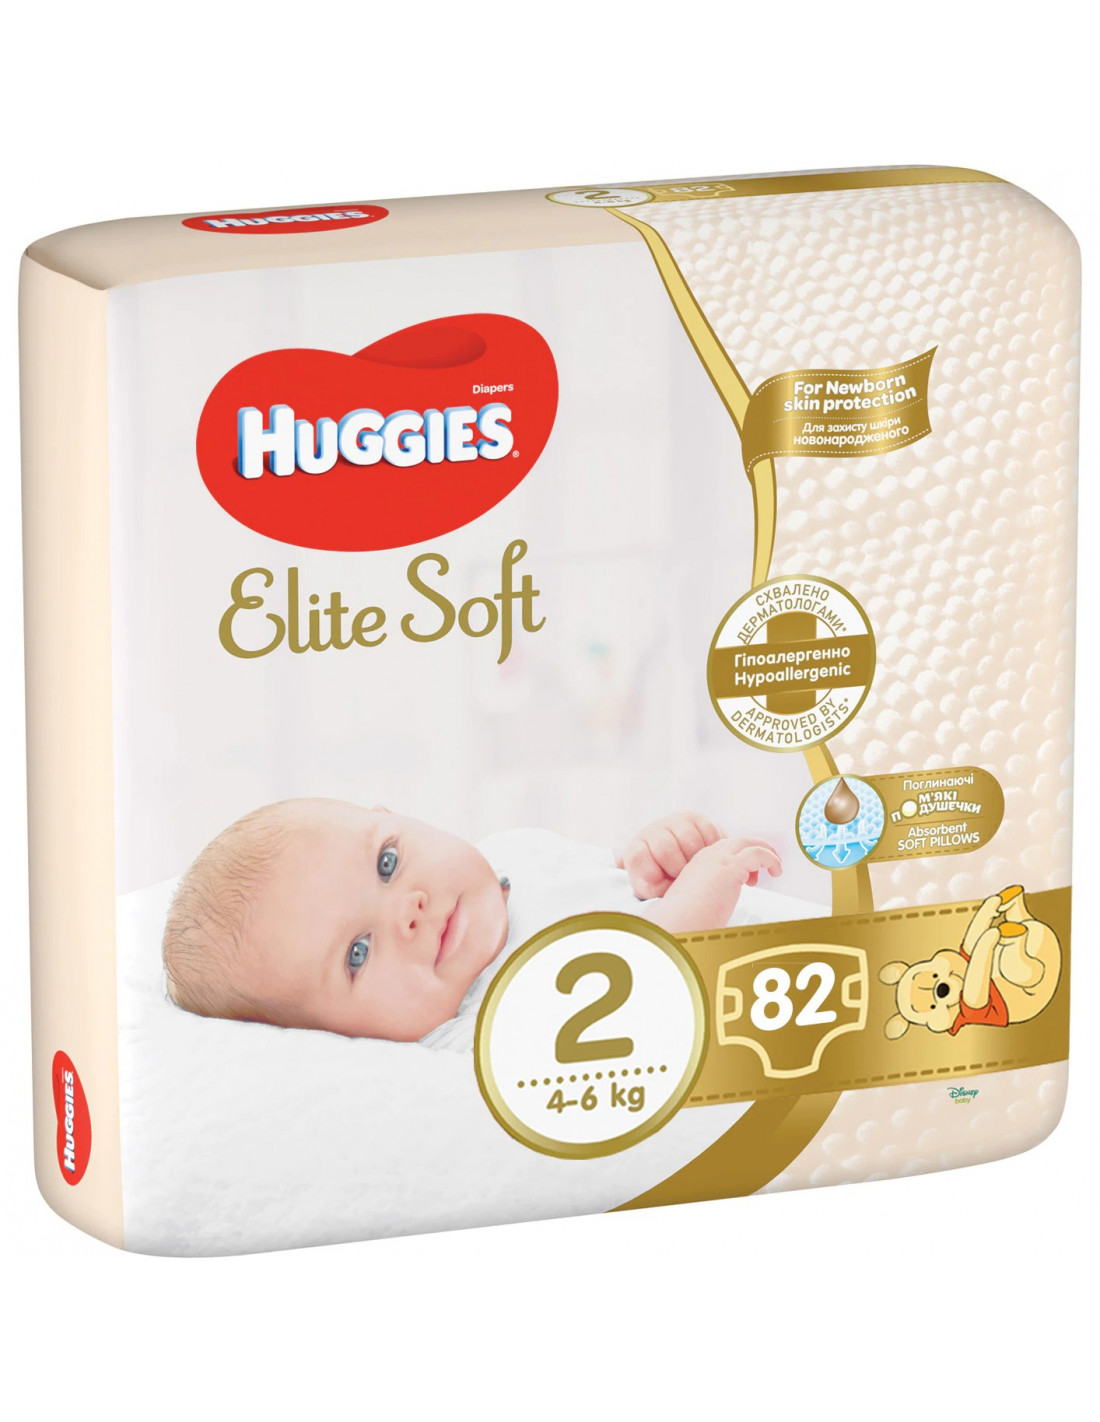 Scutece Huggies Elite Soft, NR 2, 4-6 kg, 82 bucati - SCUTECE - HUGGIES